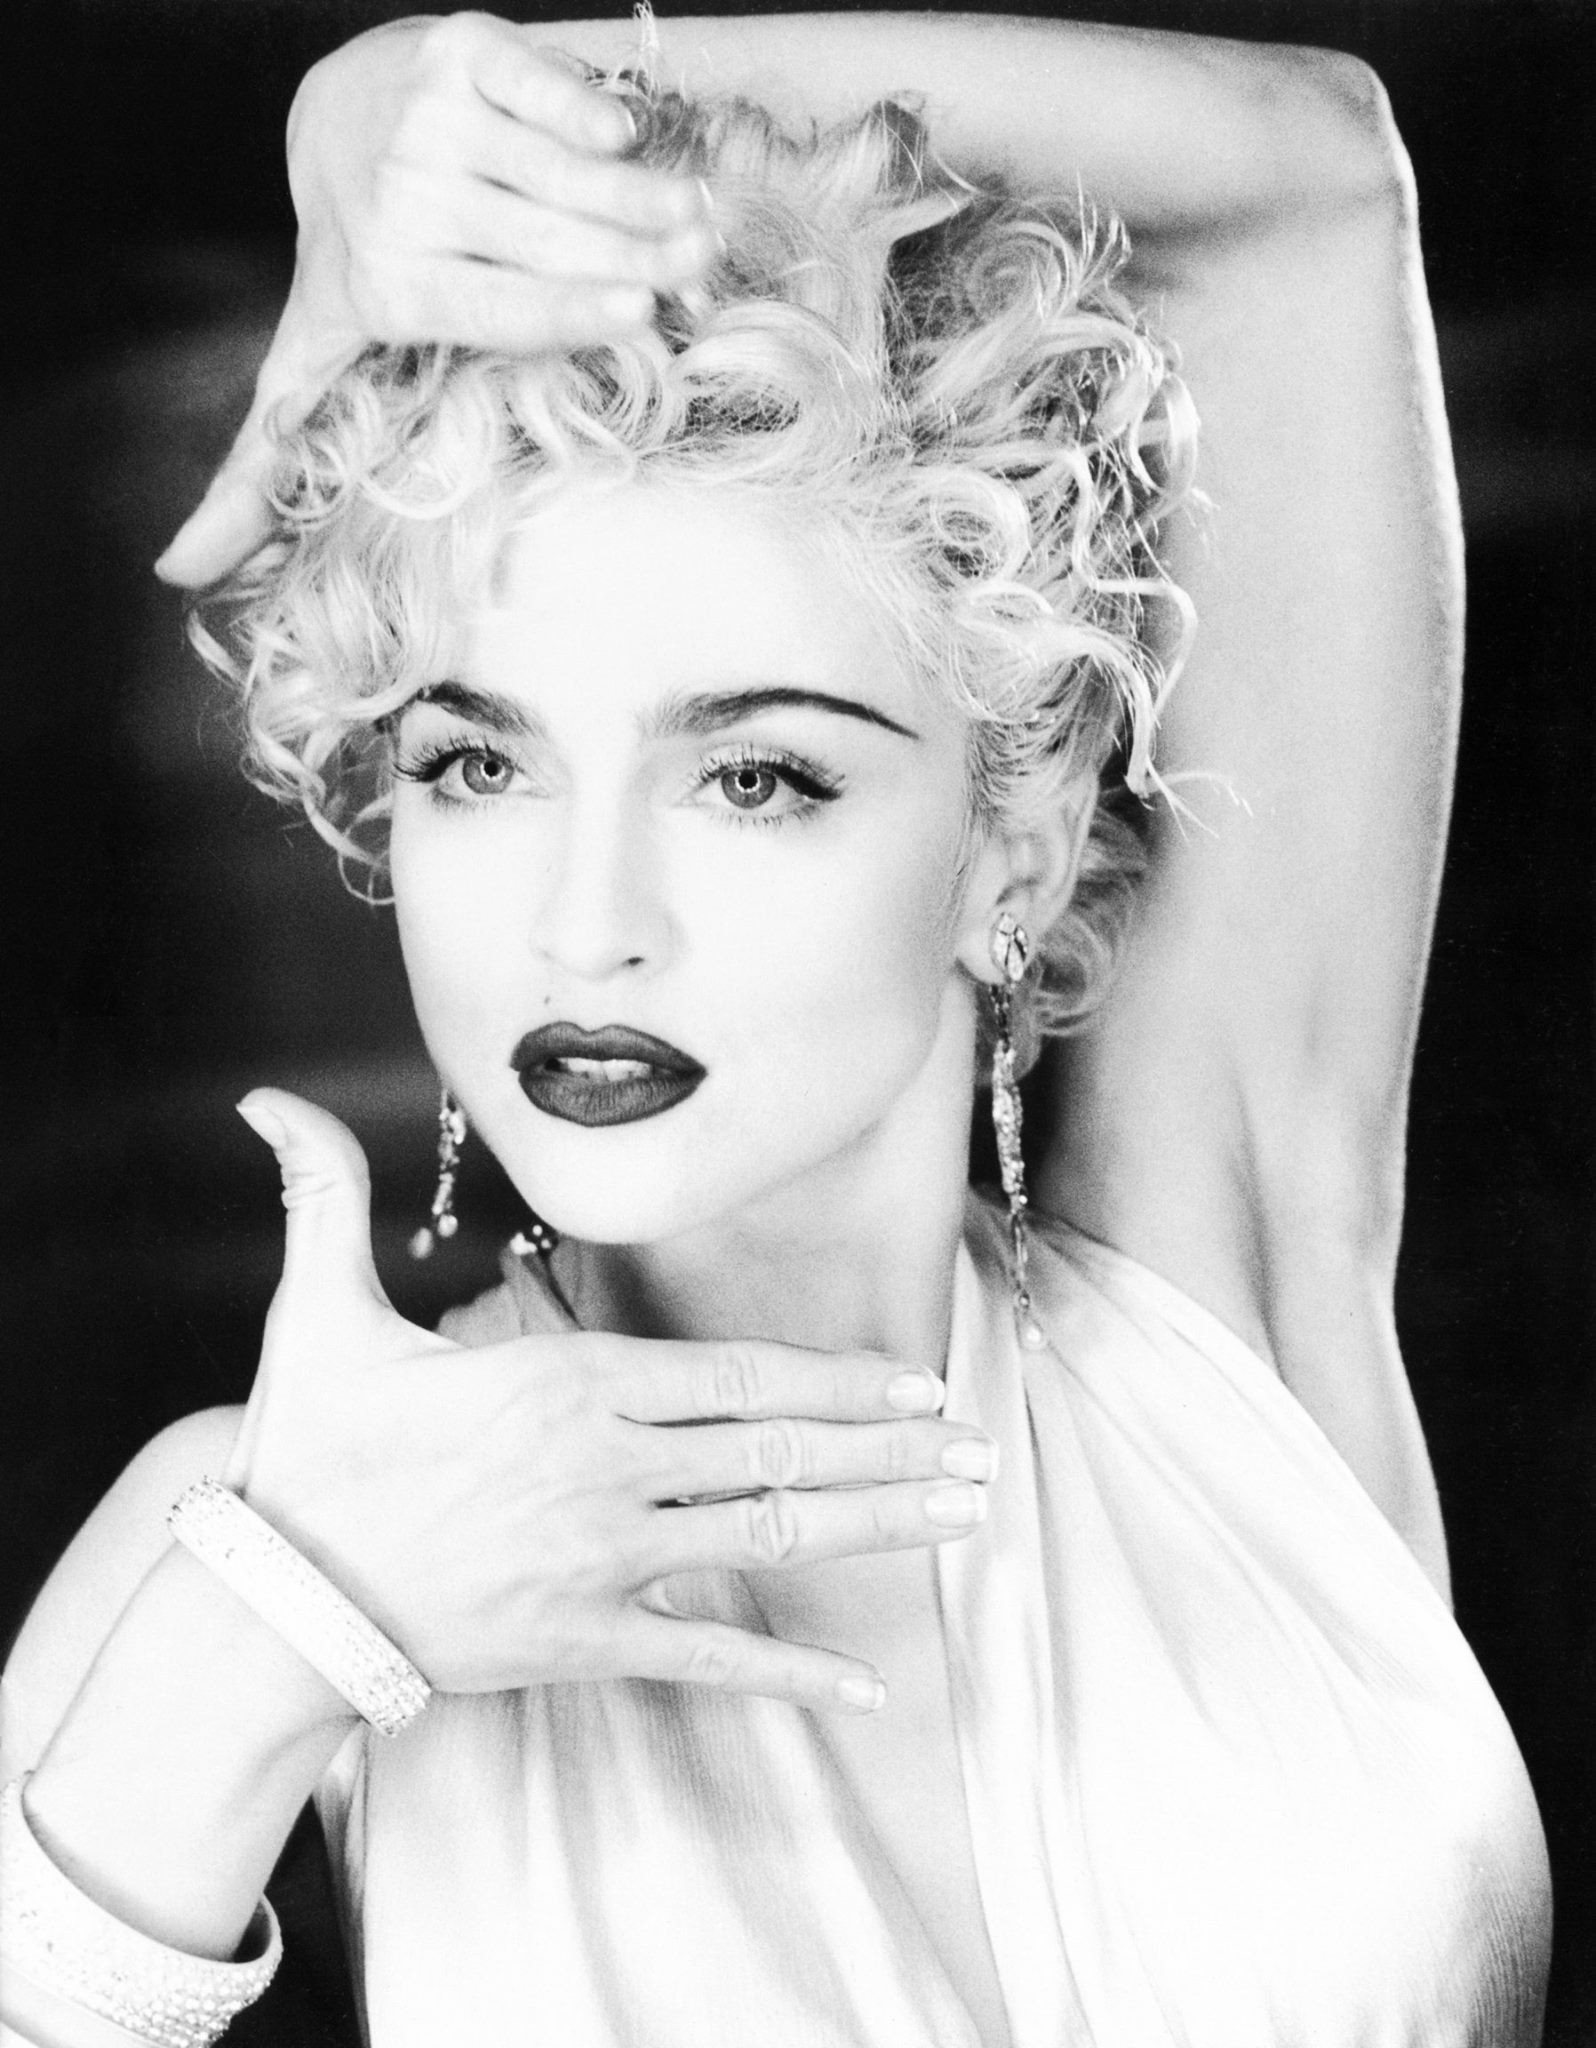 VERDICT: Hit-ul Madonnei „Vogue” nu este plagiat!